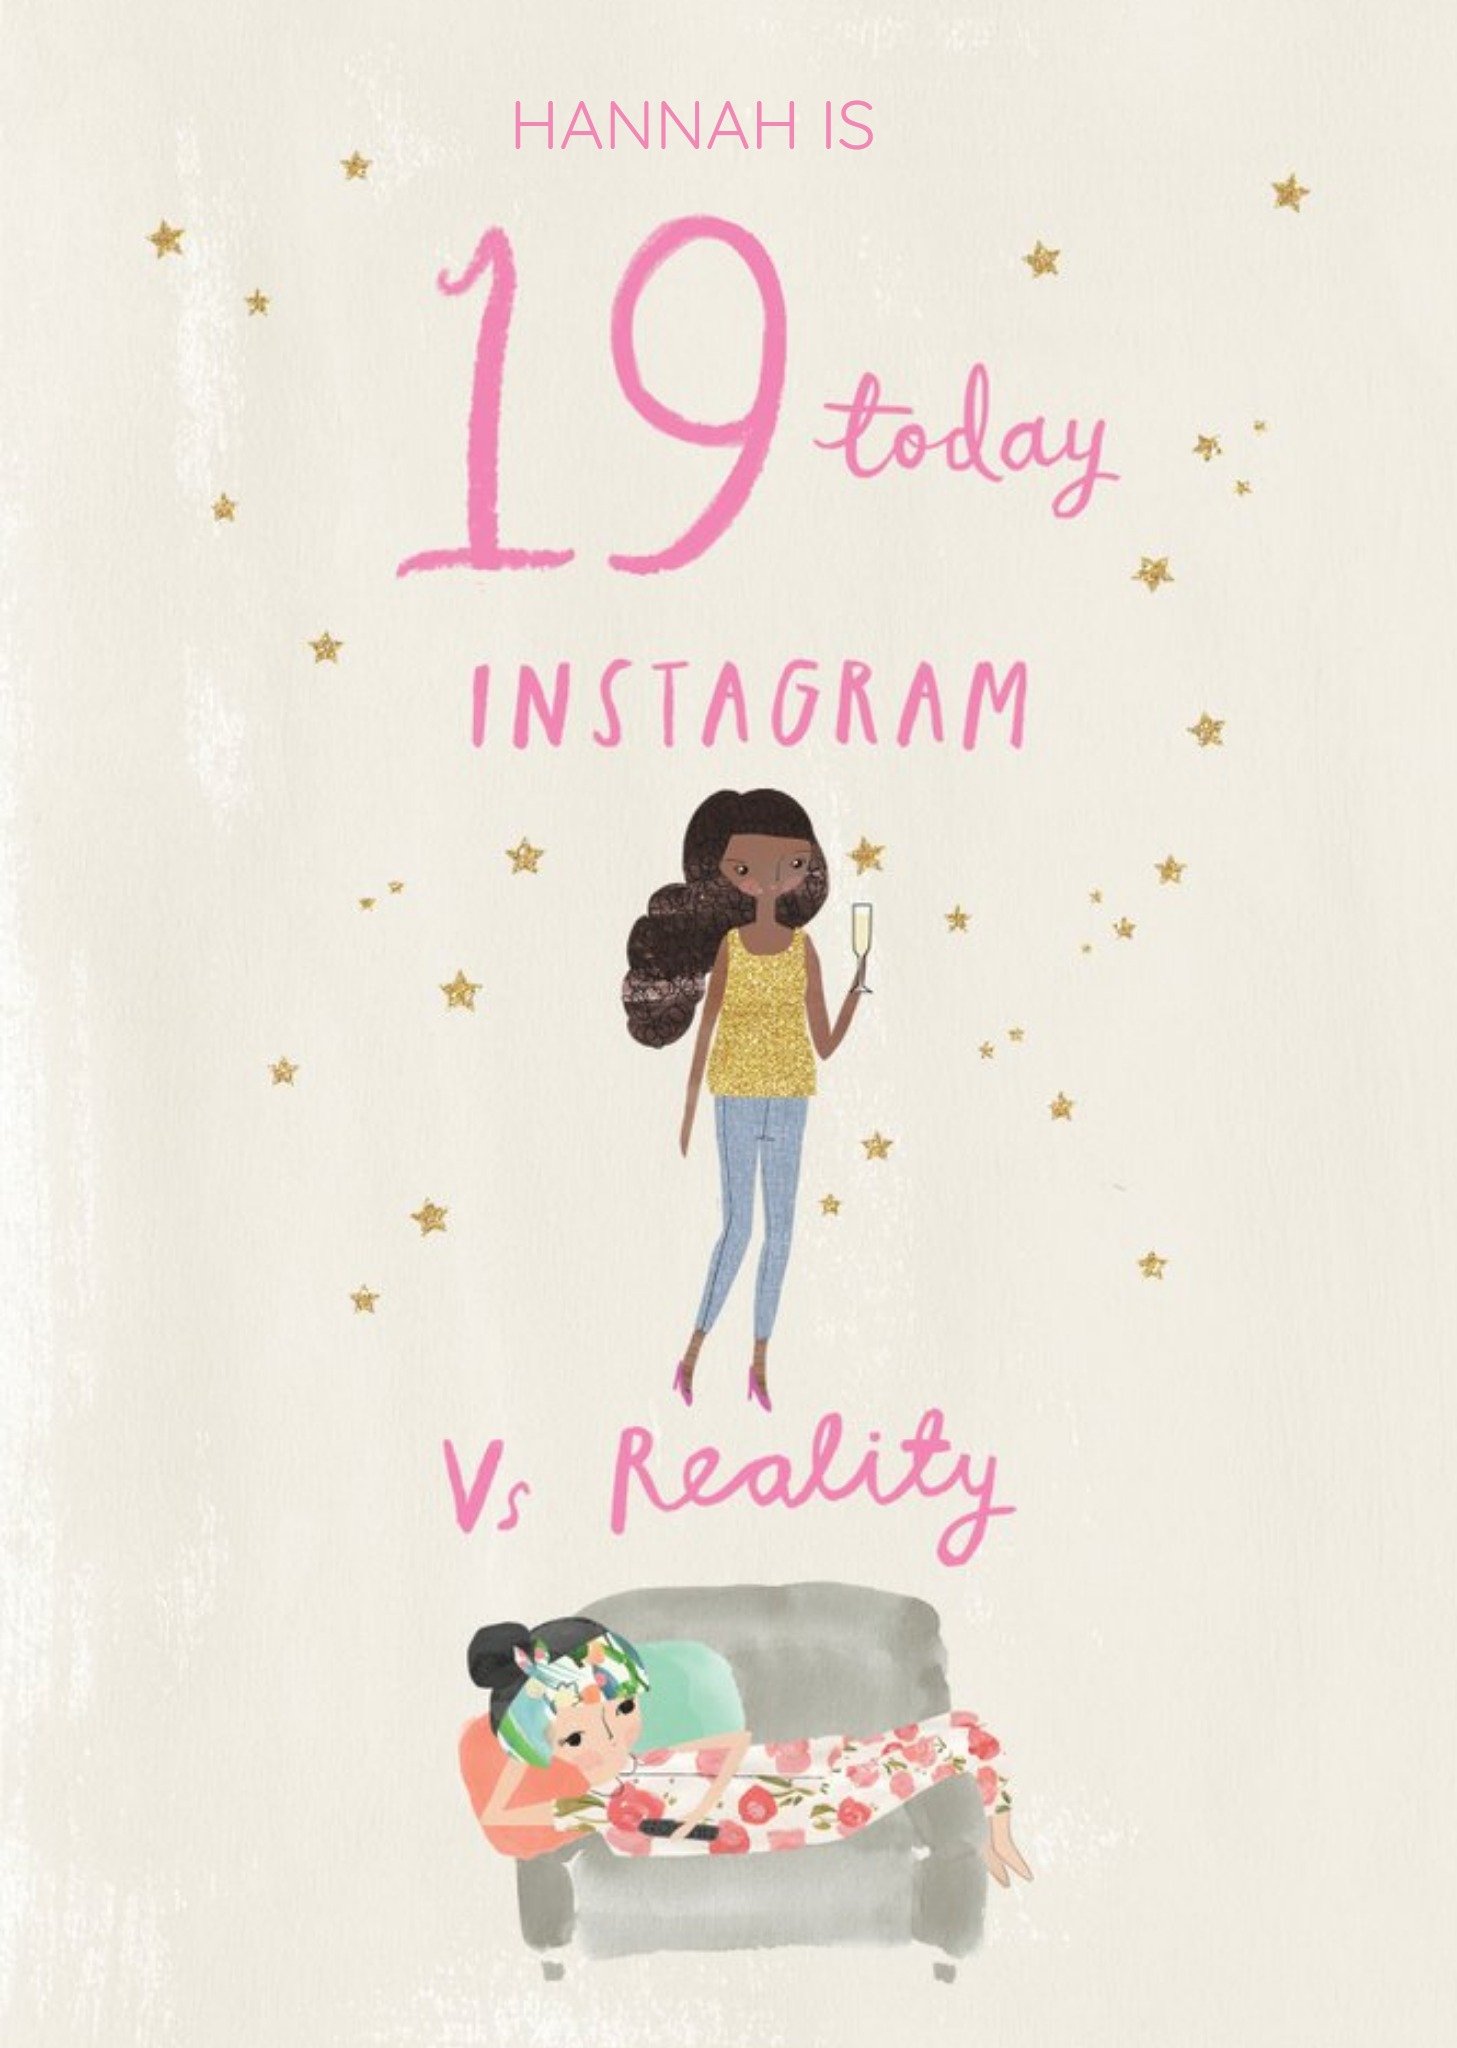 Moonpig Pigment Hey Girl Character 19 Today Instagram Vs Reality Birthday Card Ecard